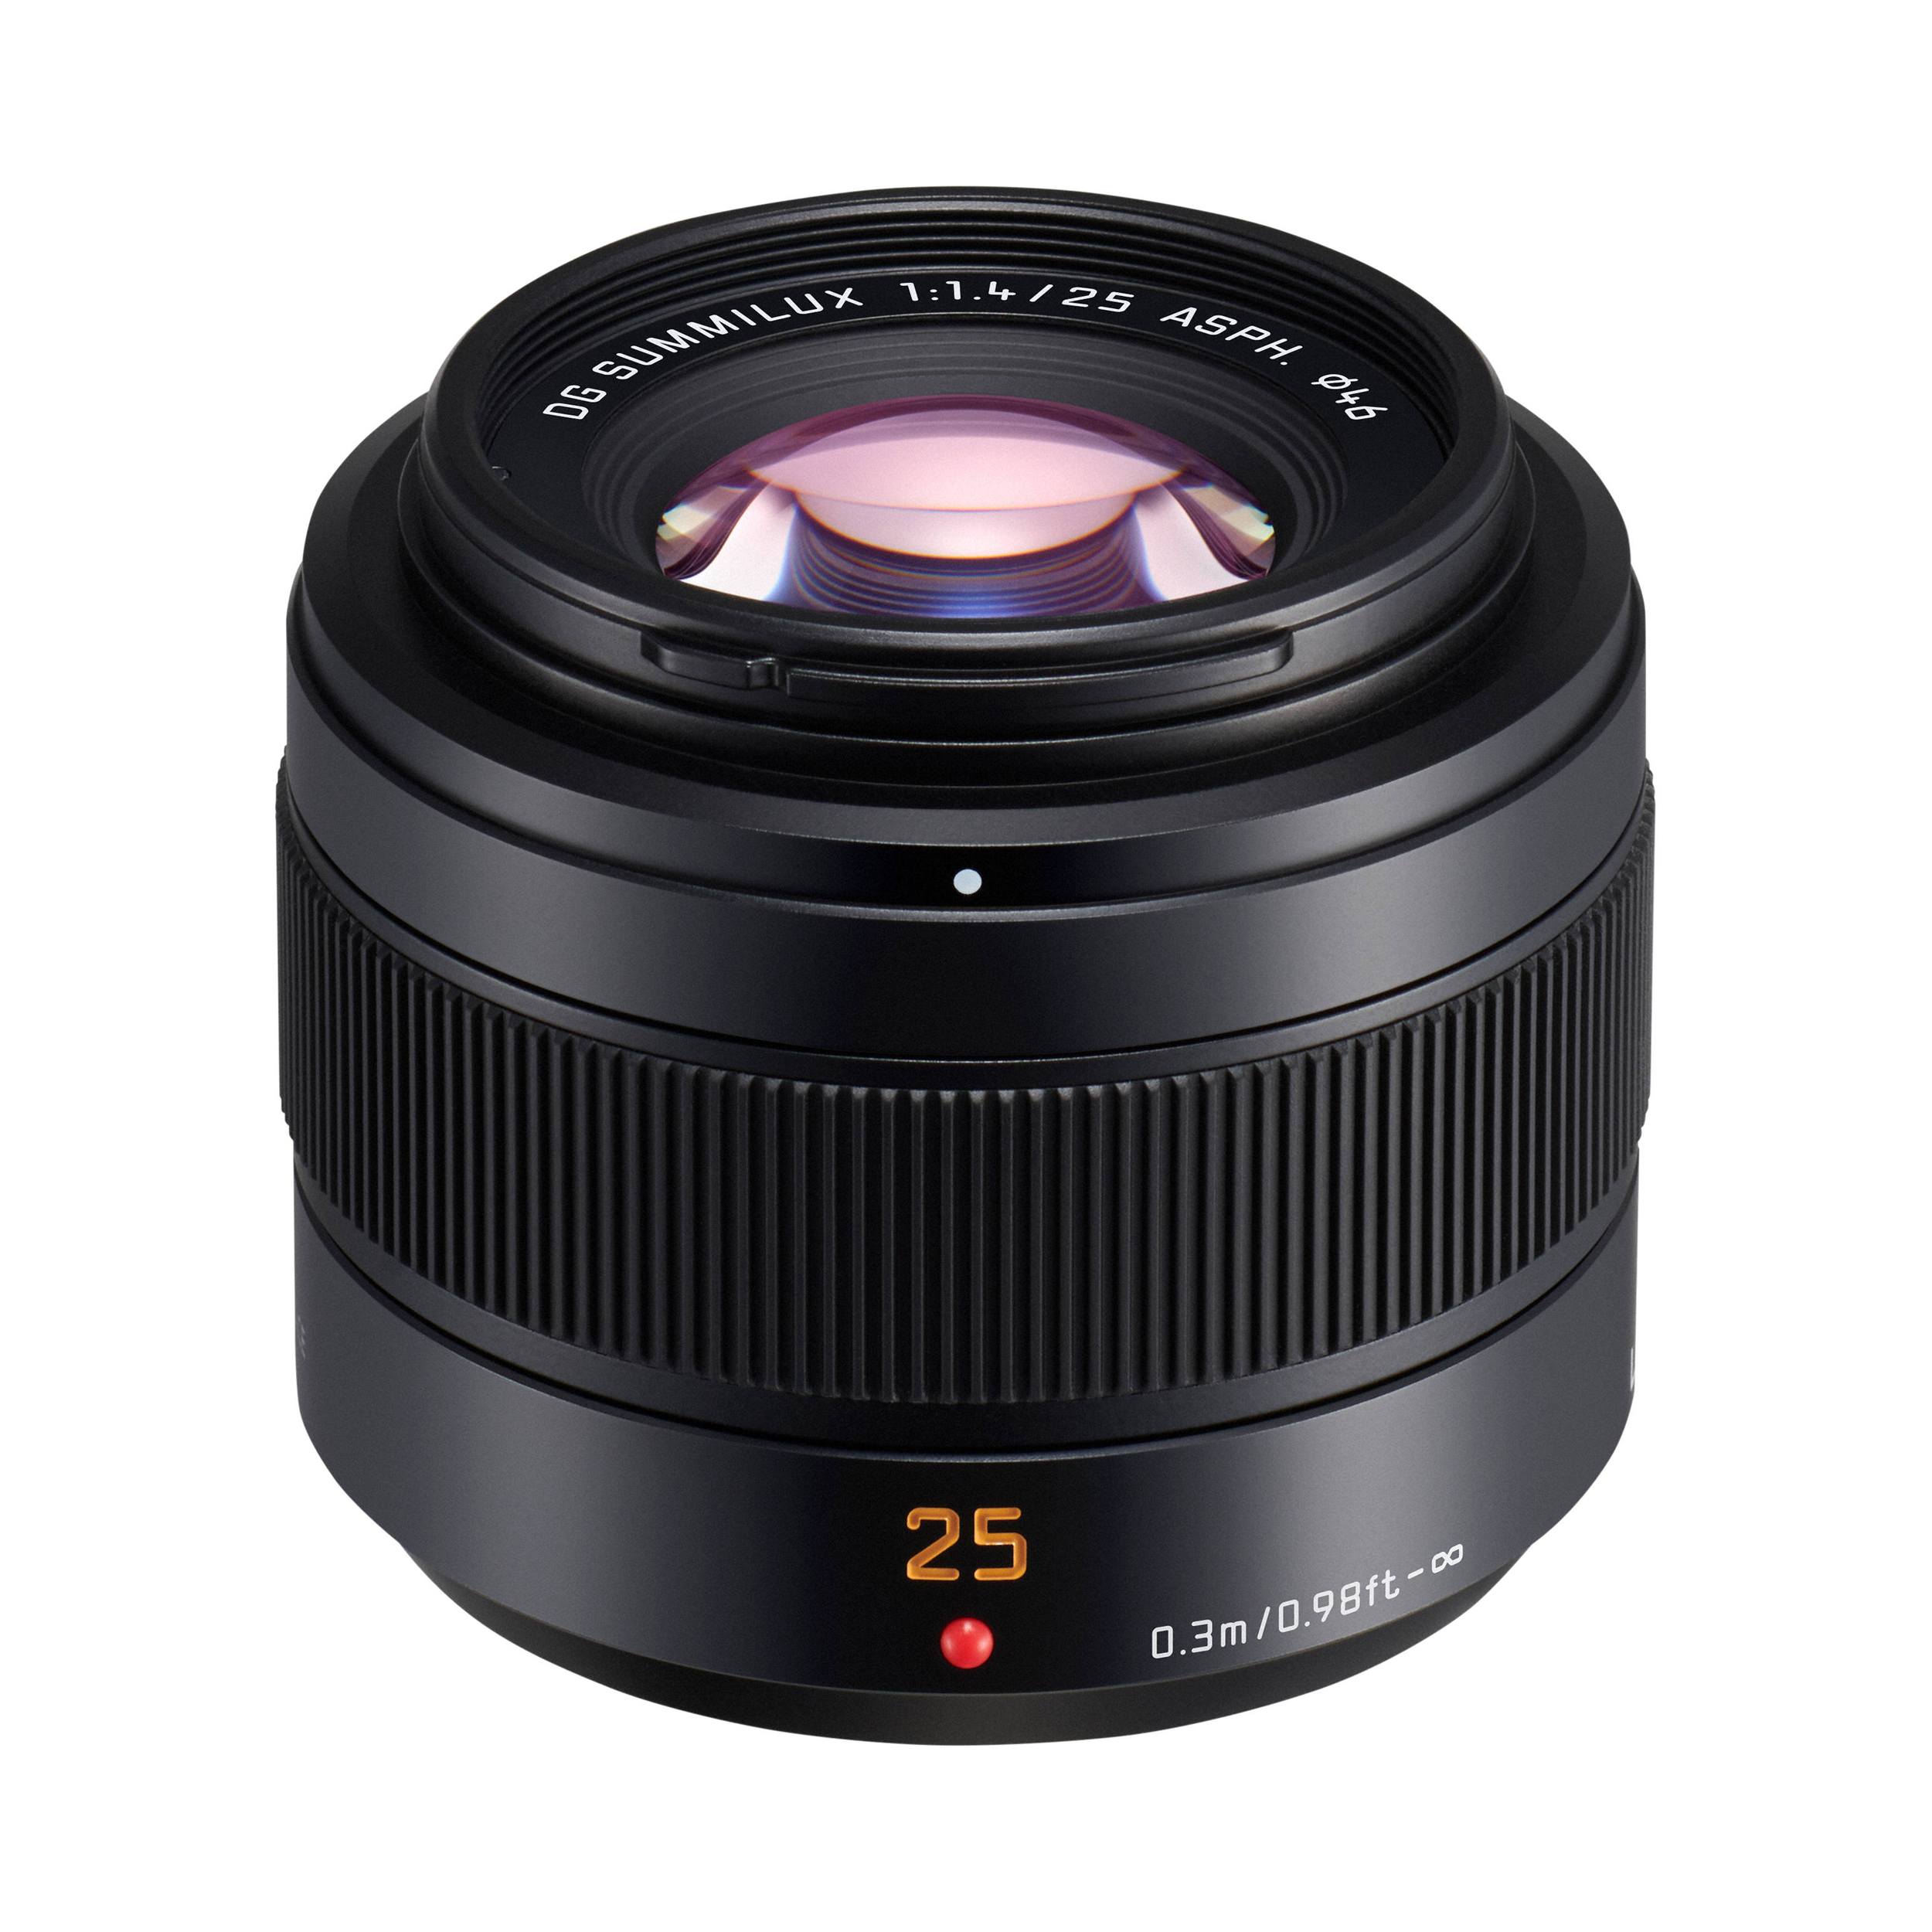 Panasonic Leica DG Summilux 25mm f/1.4 II ASPH. Lens HXA025